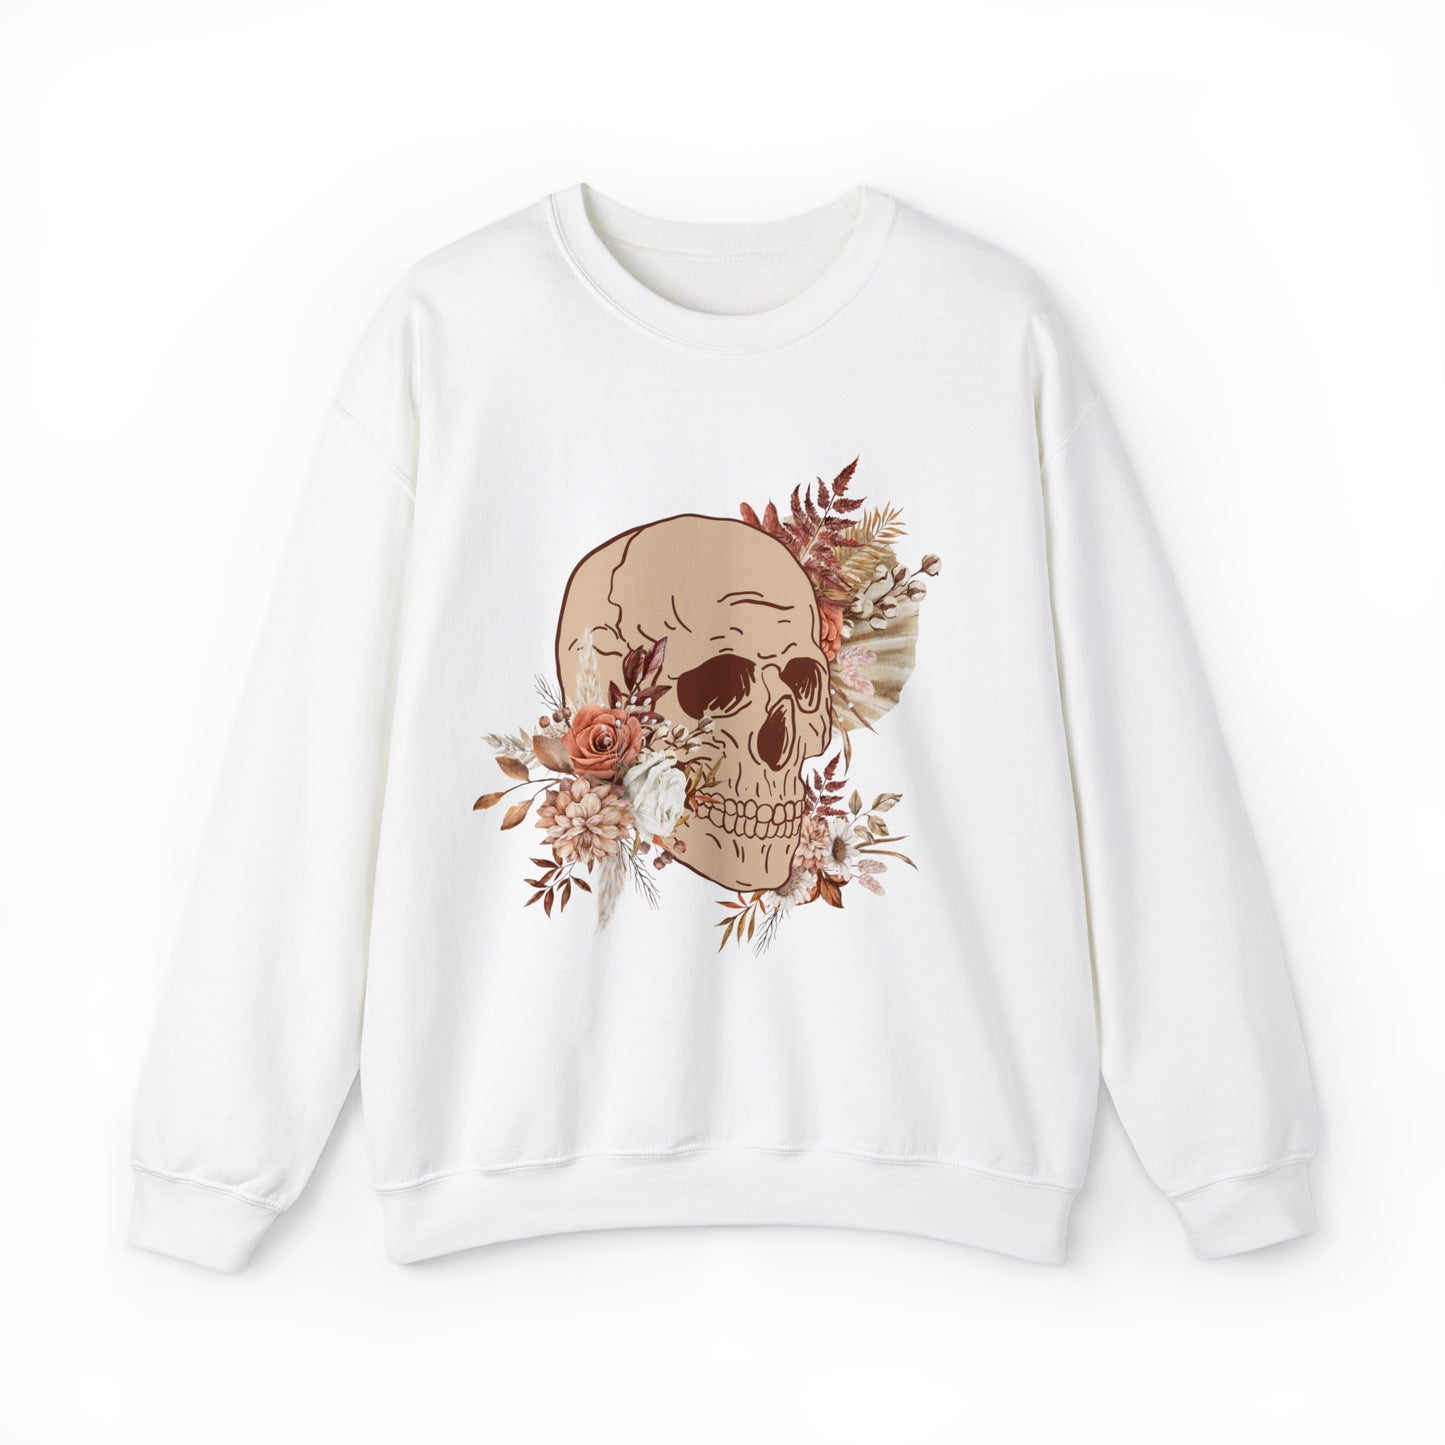 Unisex Vintage Skull and Flower Heavy Blend Crewneck Sweatshirt white front